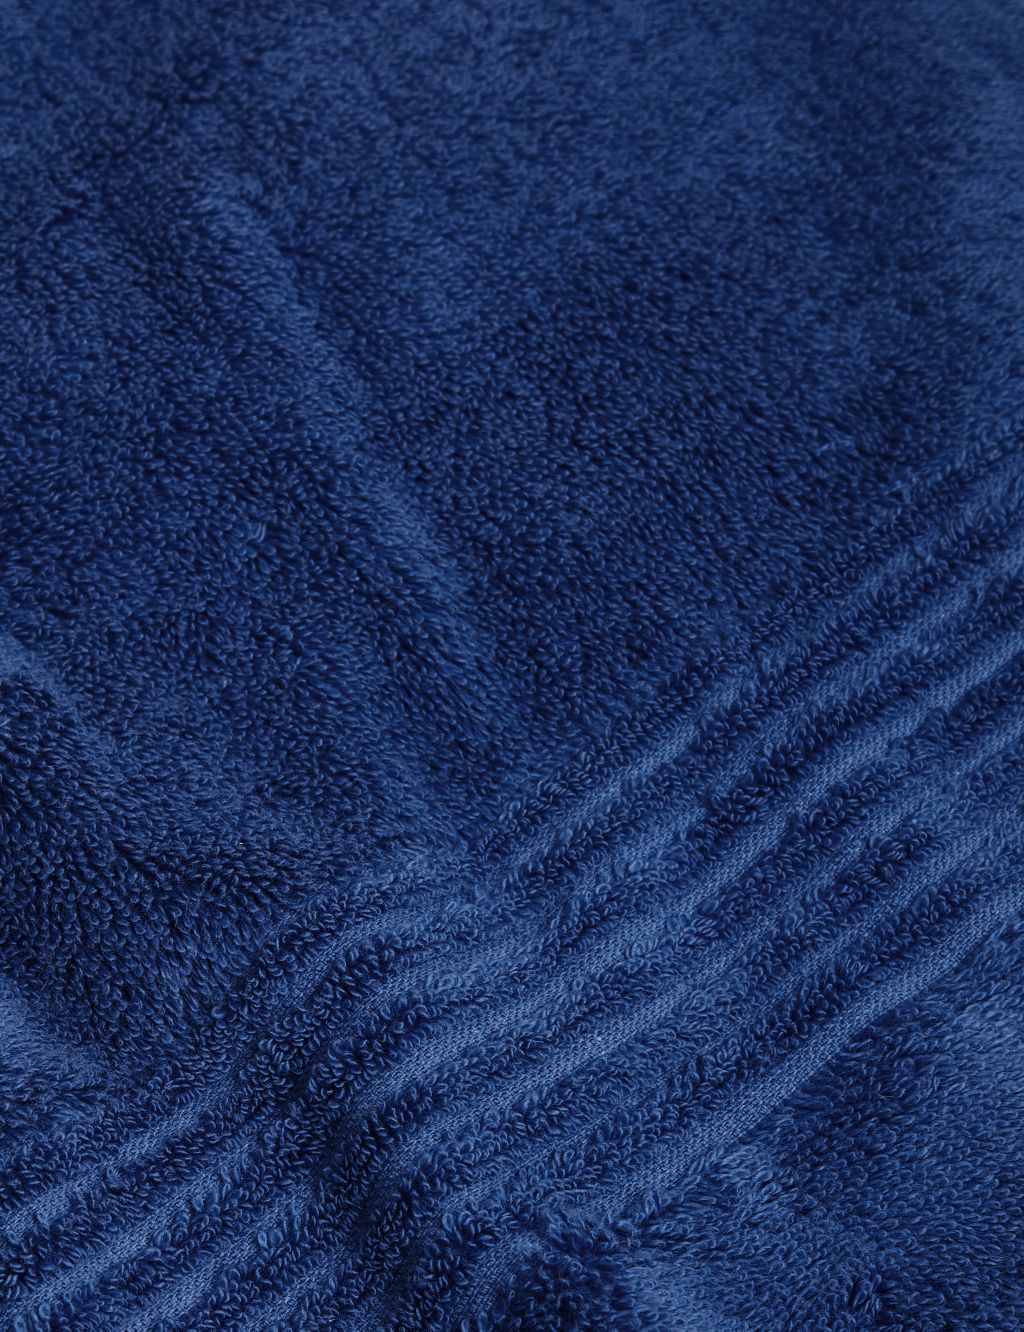 Egyptian Cotton Luxury Towel image 4